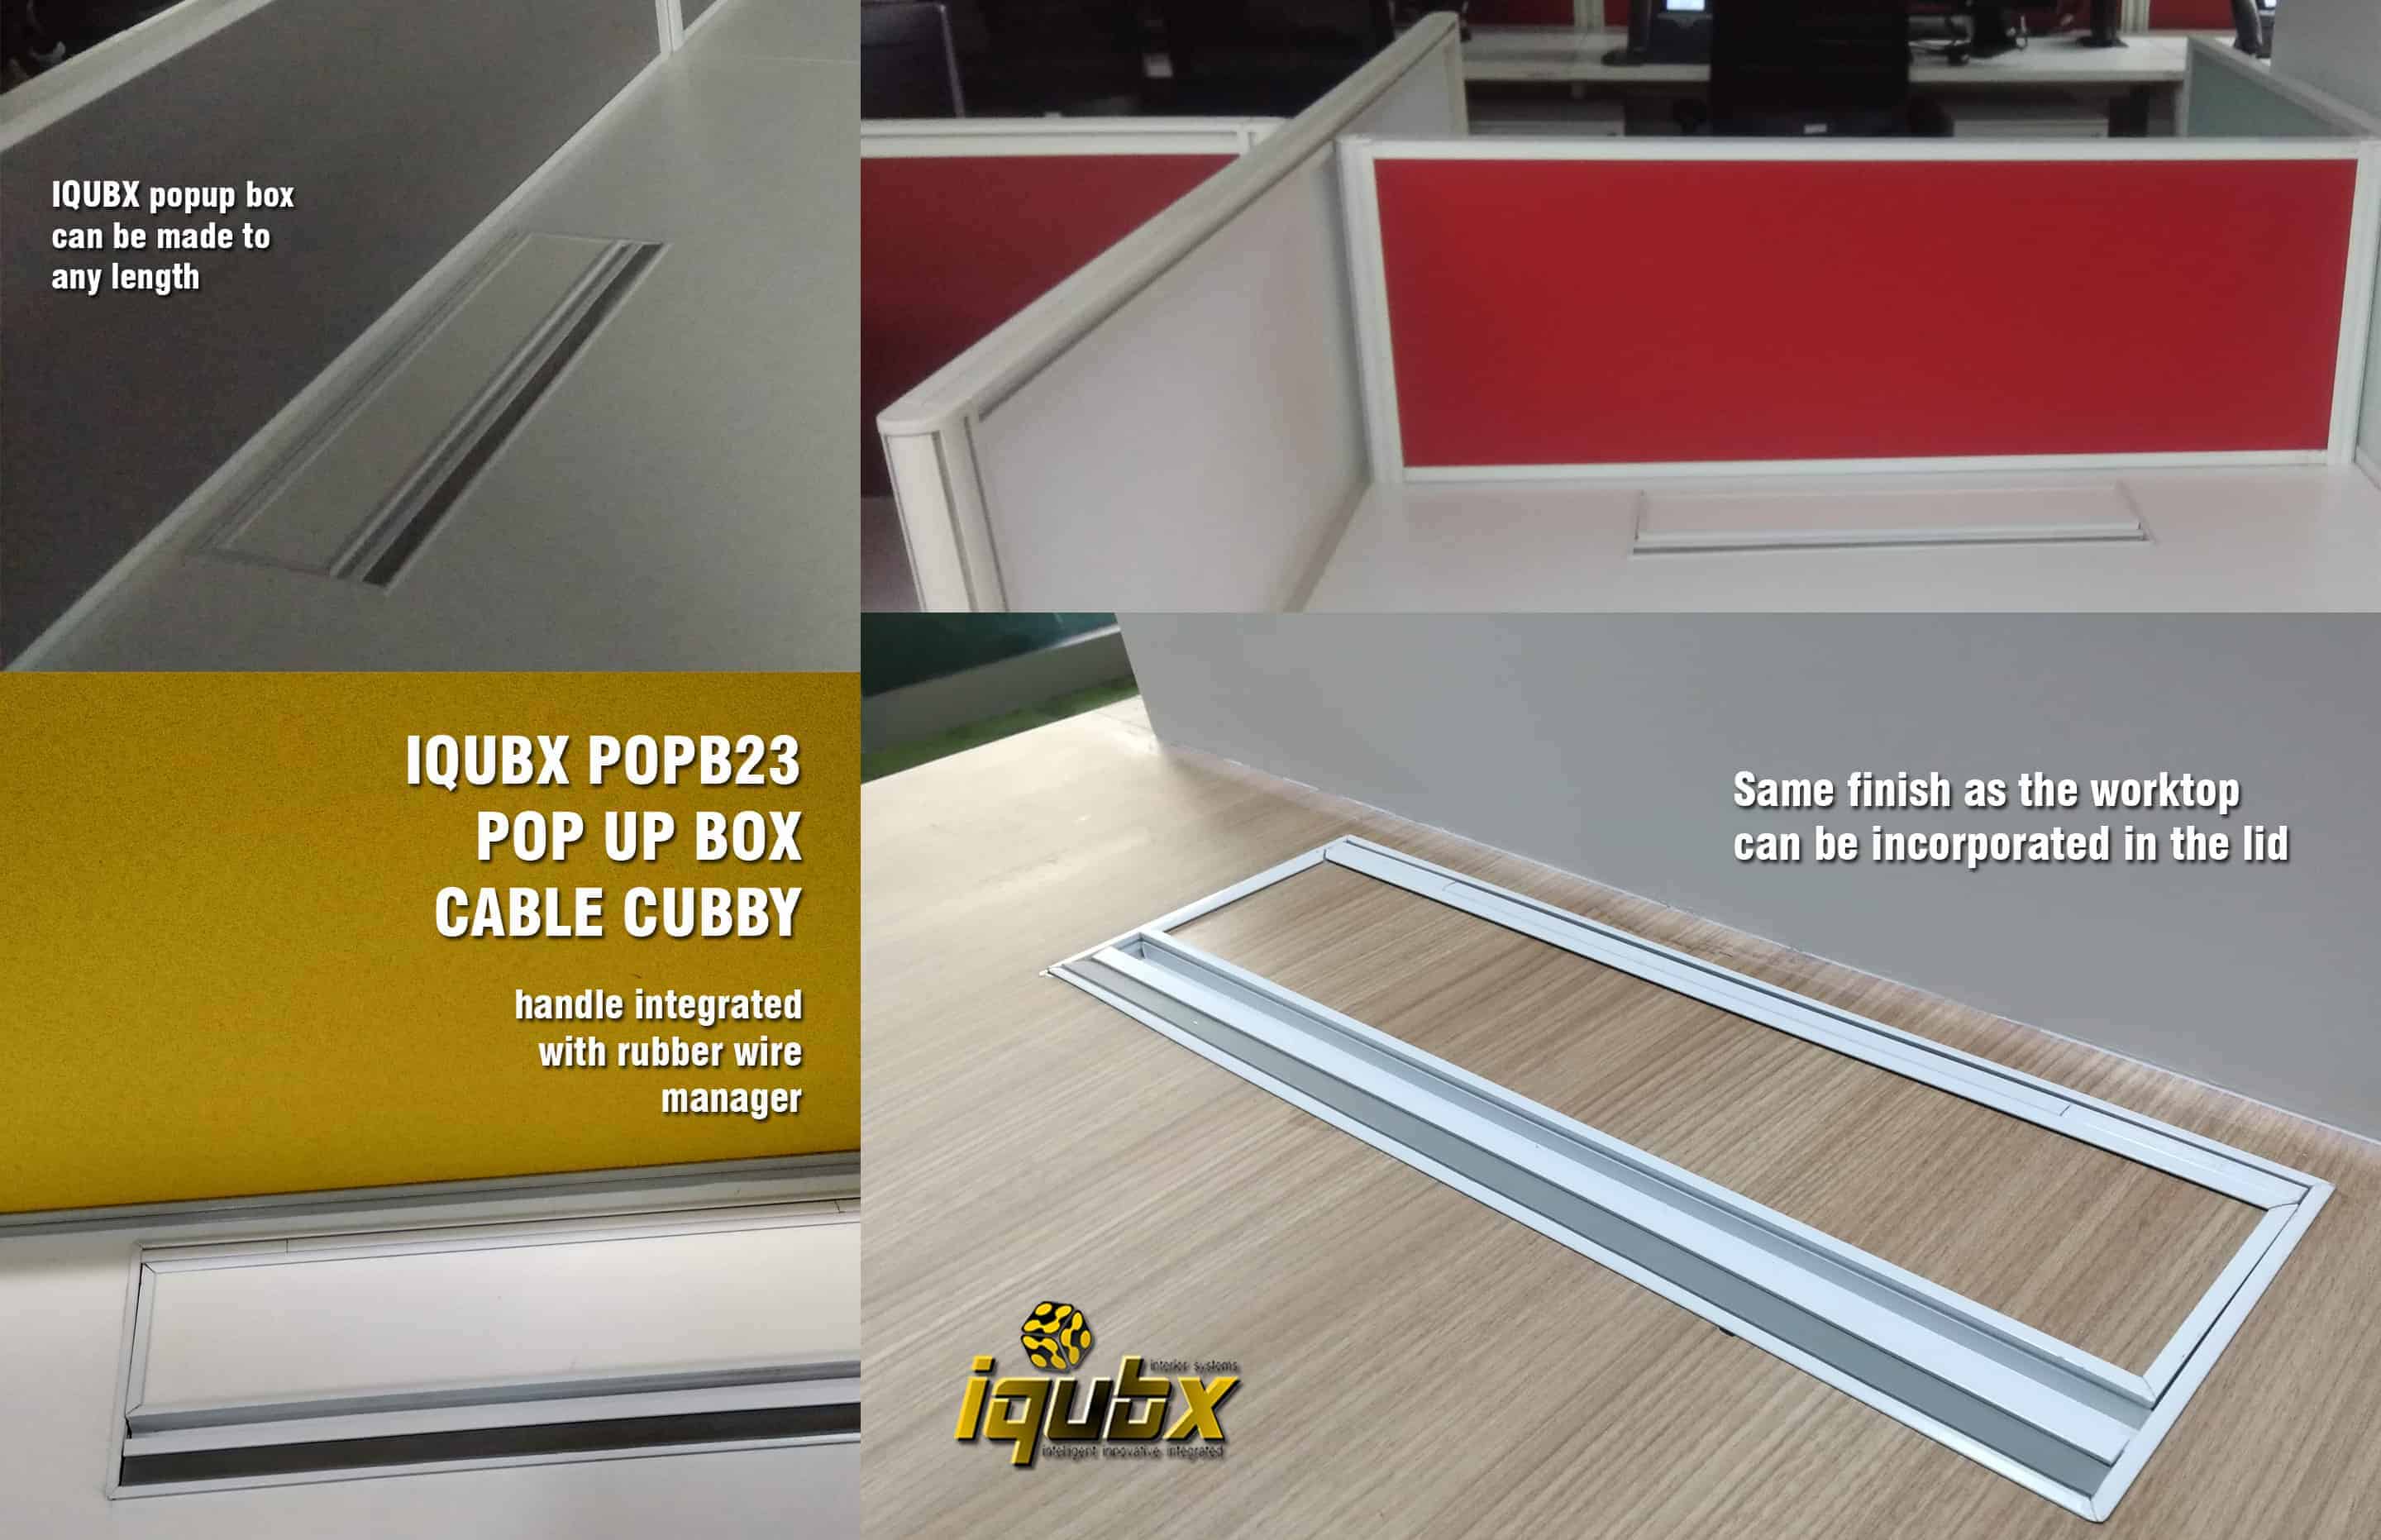 IQUBX POPB23 pop up box cable cubby lid finish